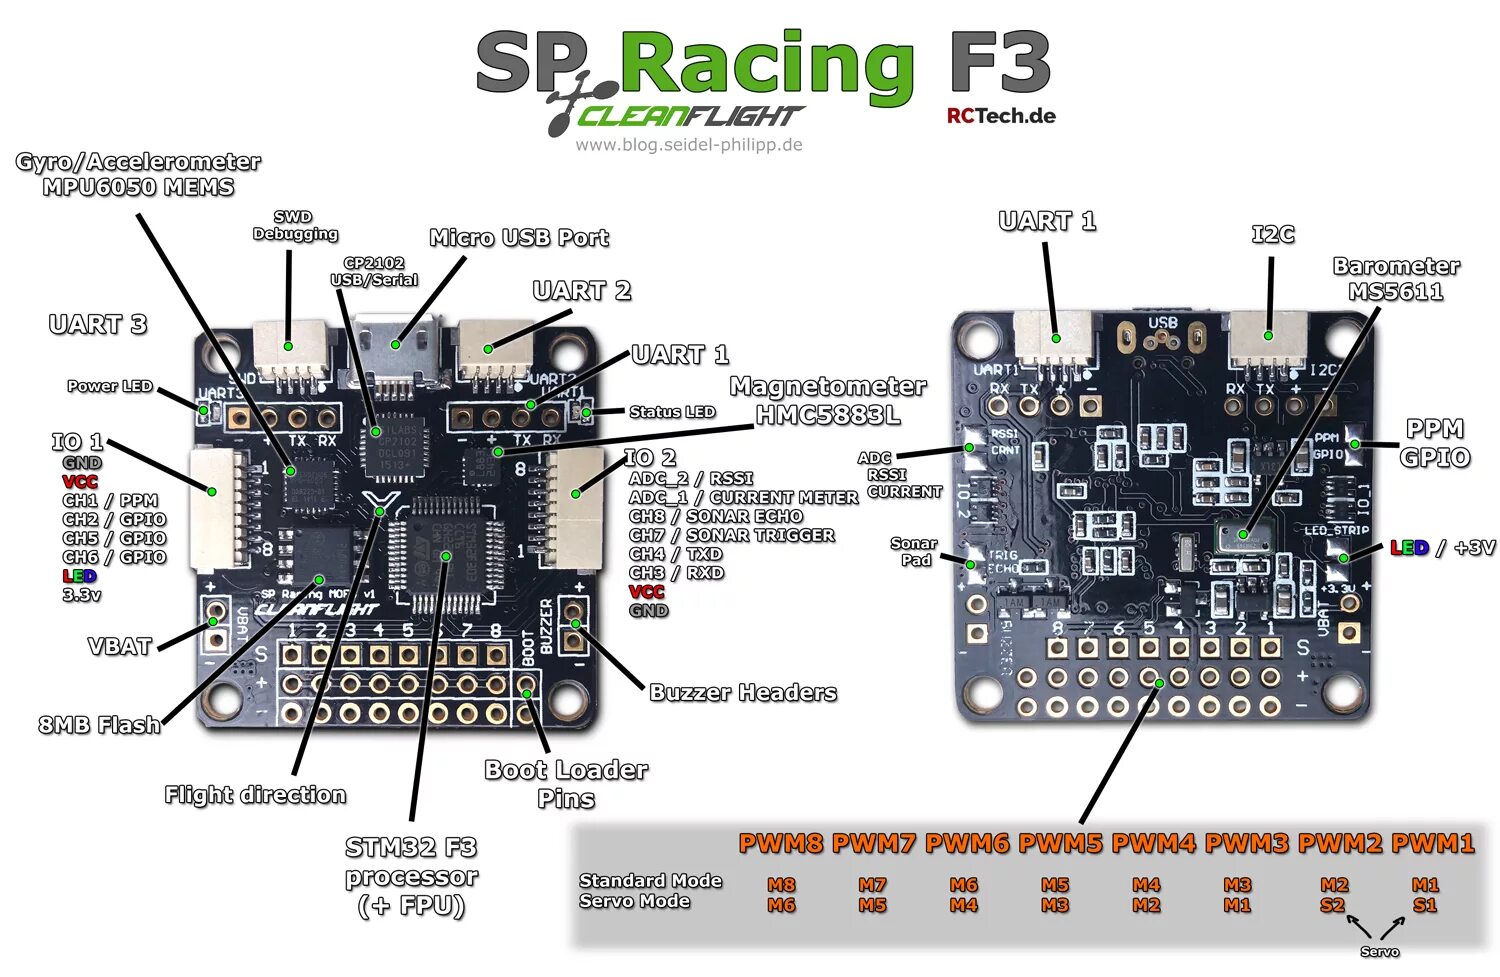 Cc3 3 32. SP Racing f3. SP Racing f3 Deluxe. SP Racing Pro f3. SP Racing f3 v1.